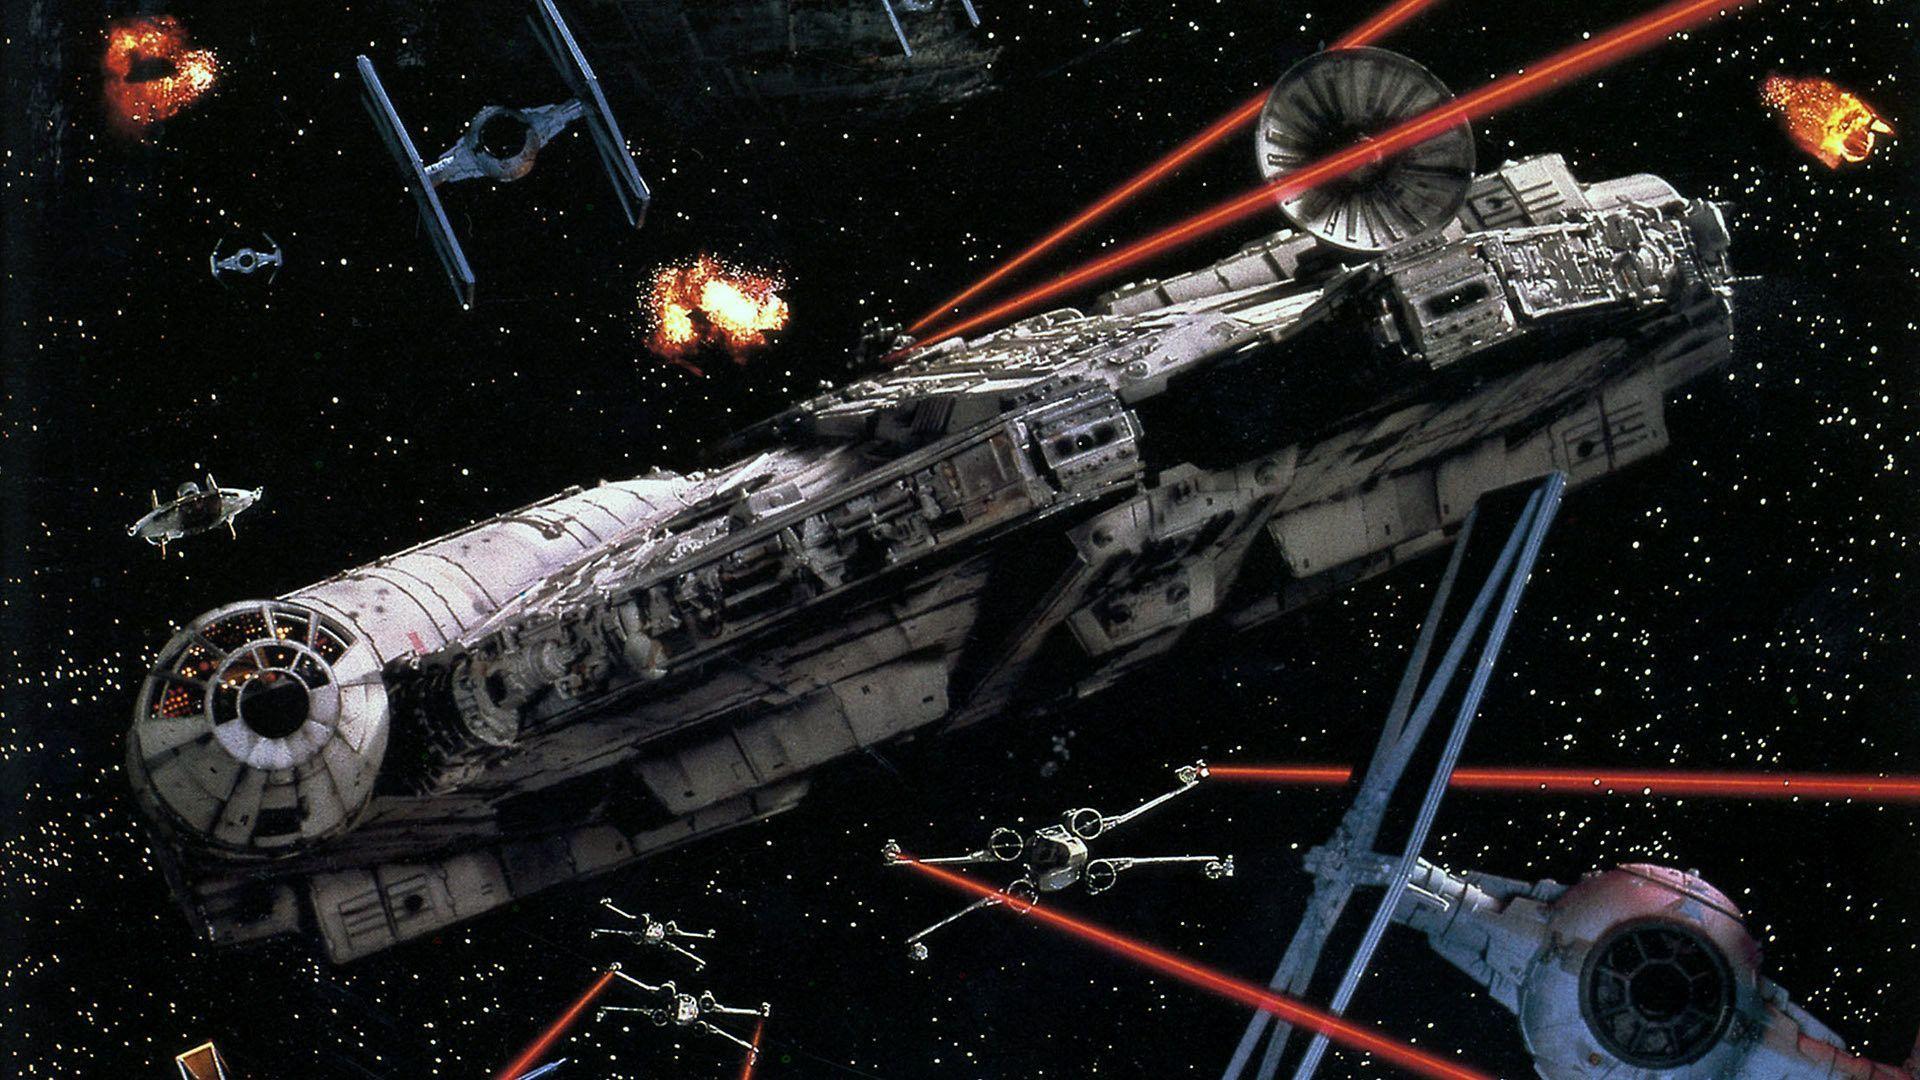 Star Wars Episode VI: Return Of The Jedi Wallpaper. Star Wars